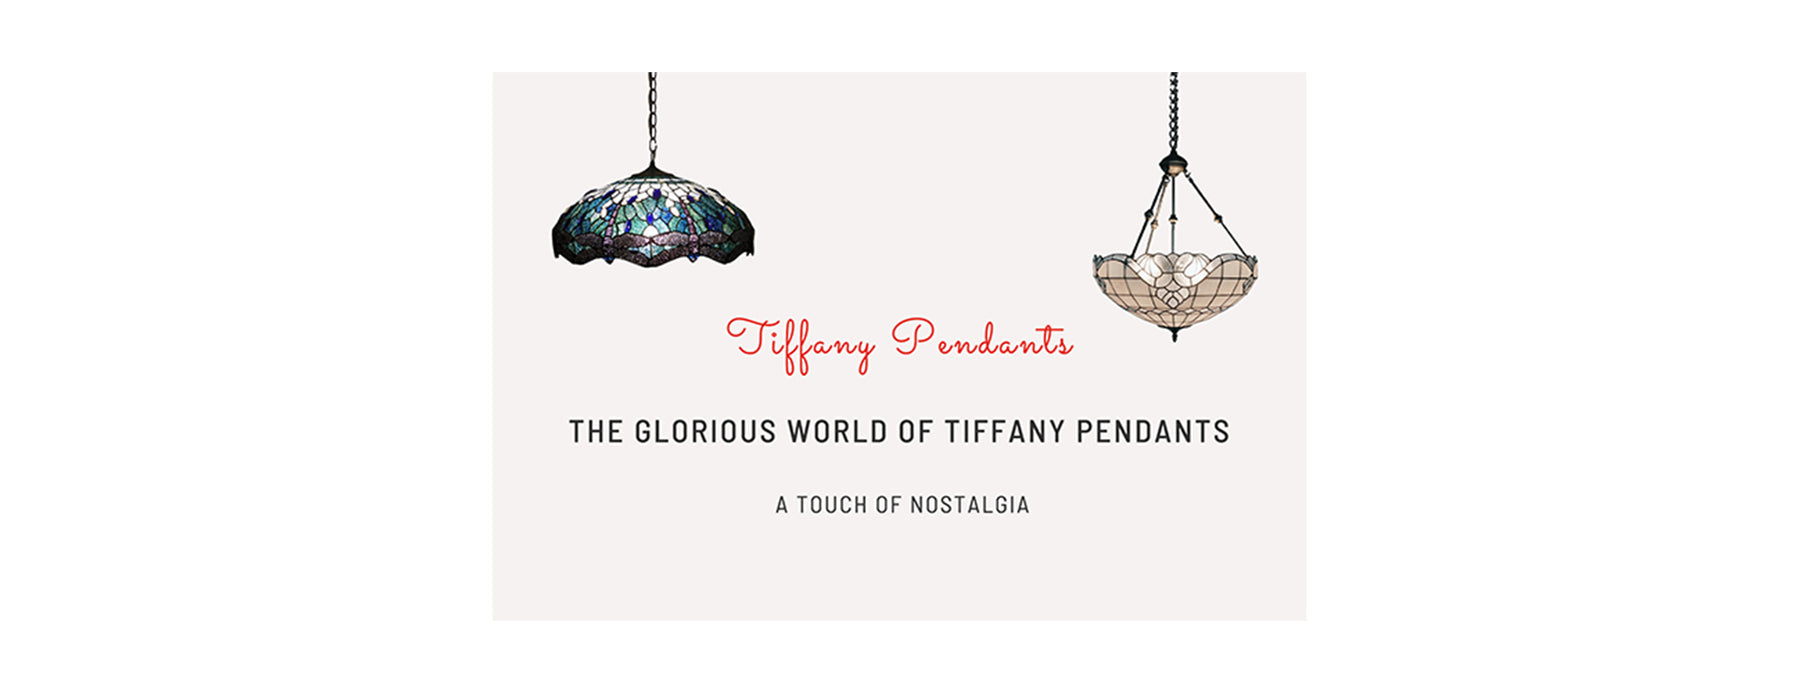 The Glorious World of Tiffany Pendants